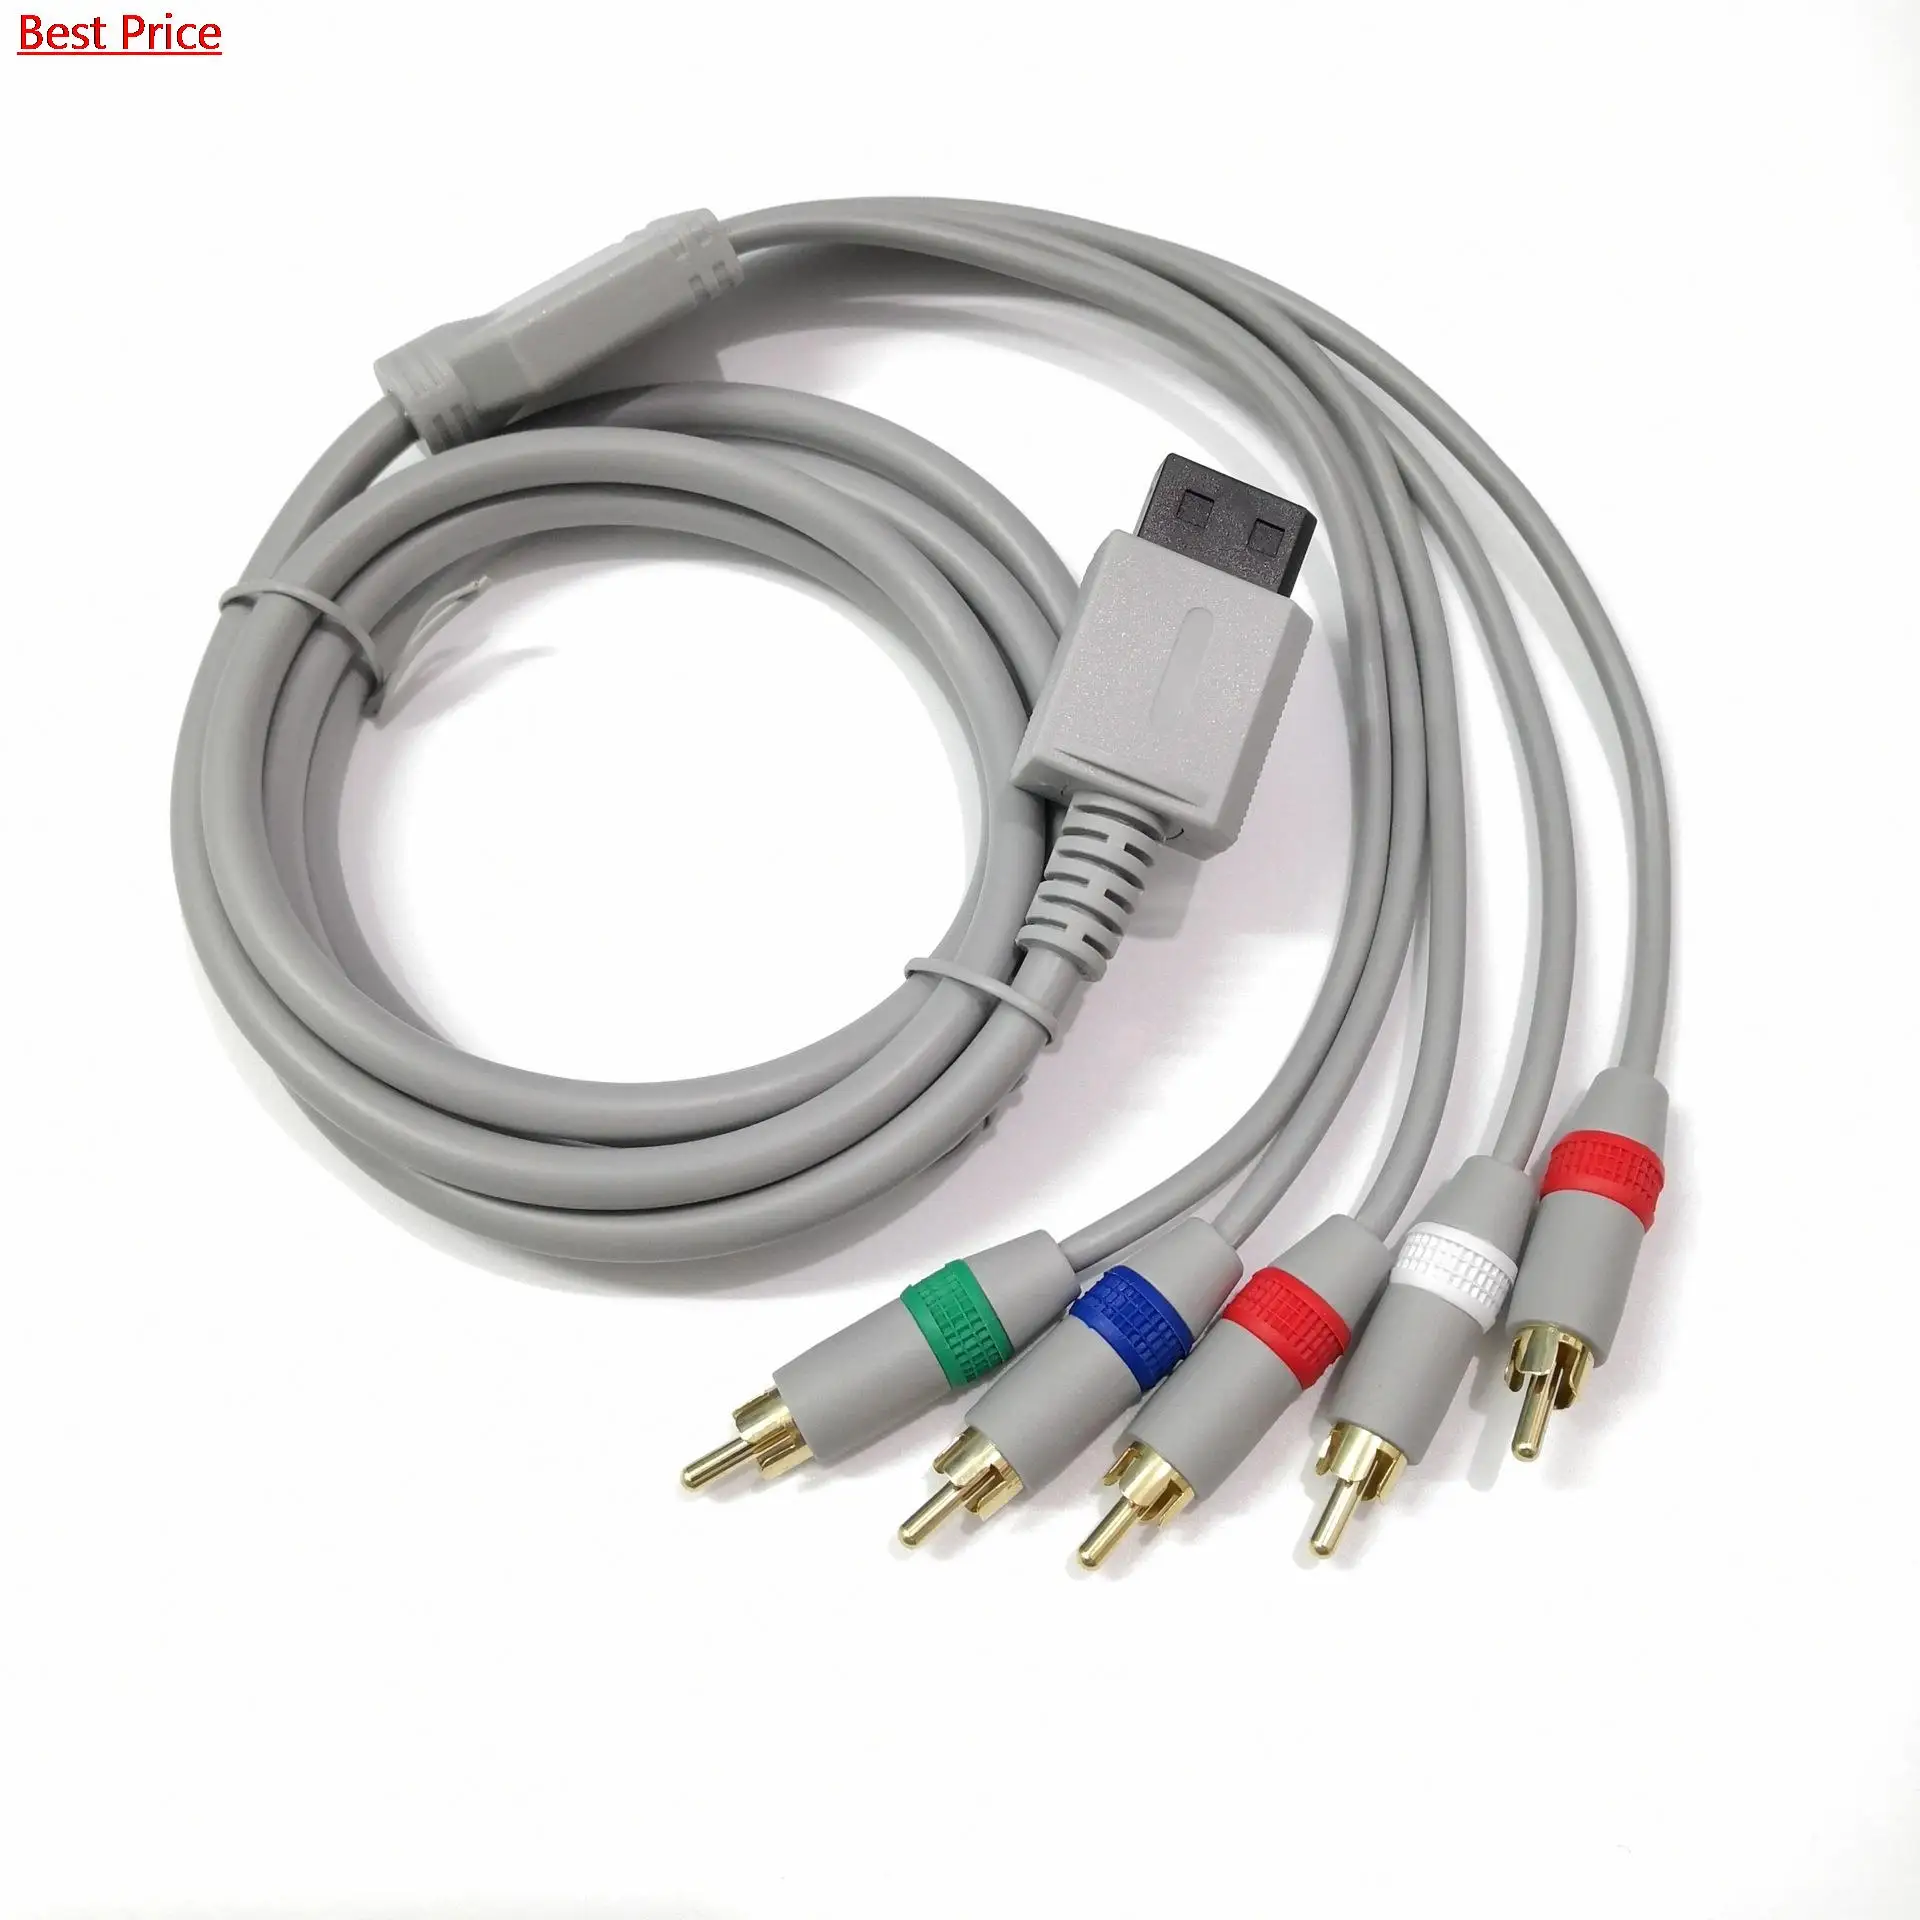 

50 шт. 1080P Компонентный кабель HDTV Аудио Видео AV 5RCA кабель для Nintendo Wii Game Cable Support 1080i / 720p HDTV System